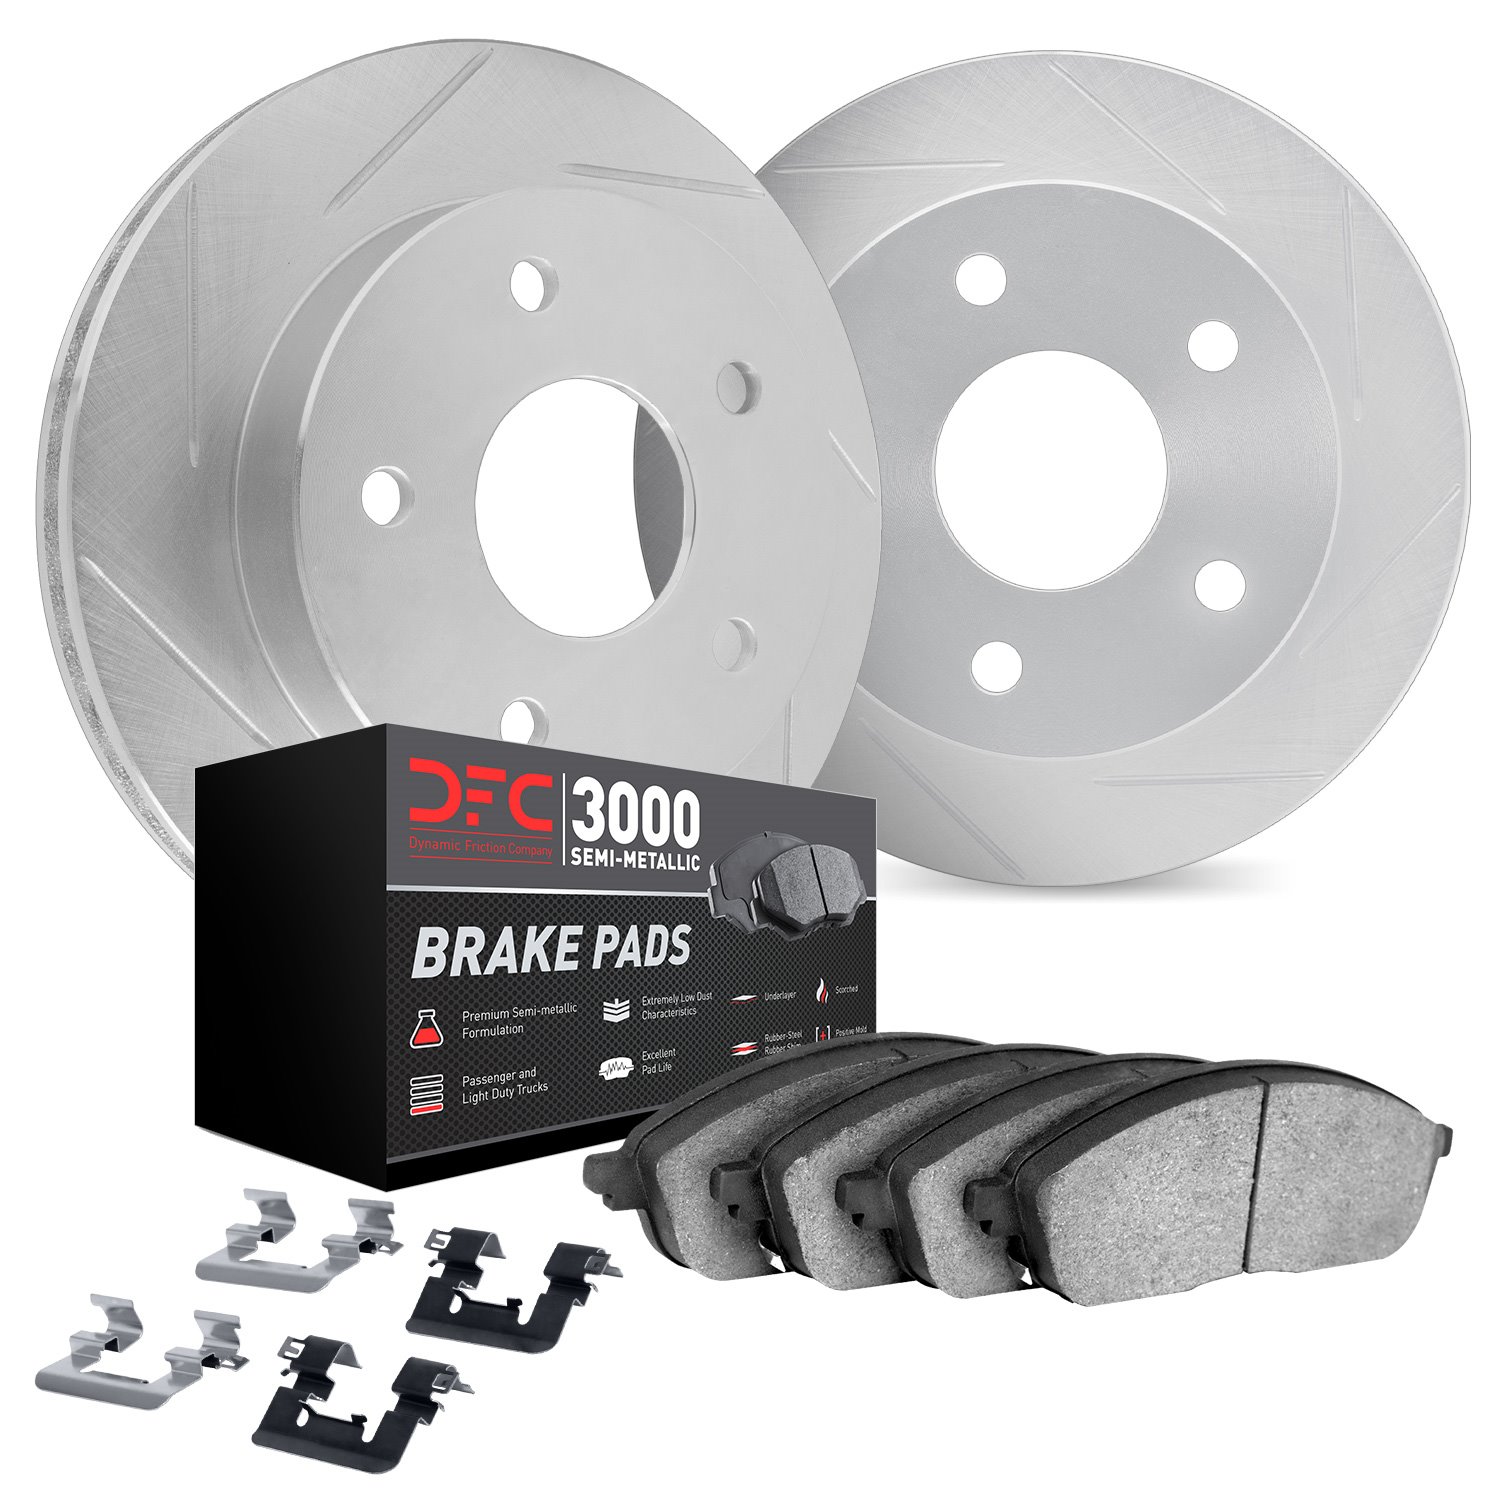 5112-75029 Slotted Brake Rotors with 3000-Series Semi-Metallic Brake Pads Kit & Hardware [Silver], Fits Select Lexus/Toyota/Scio